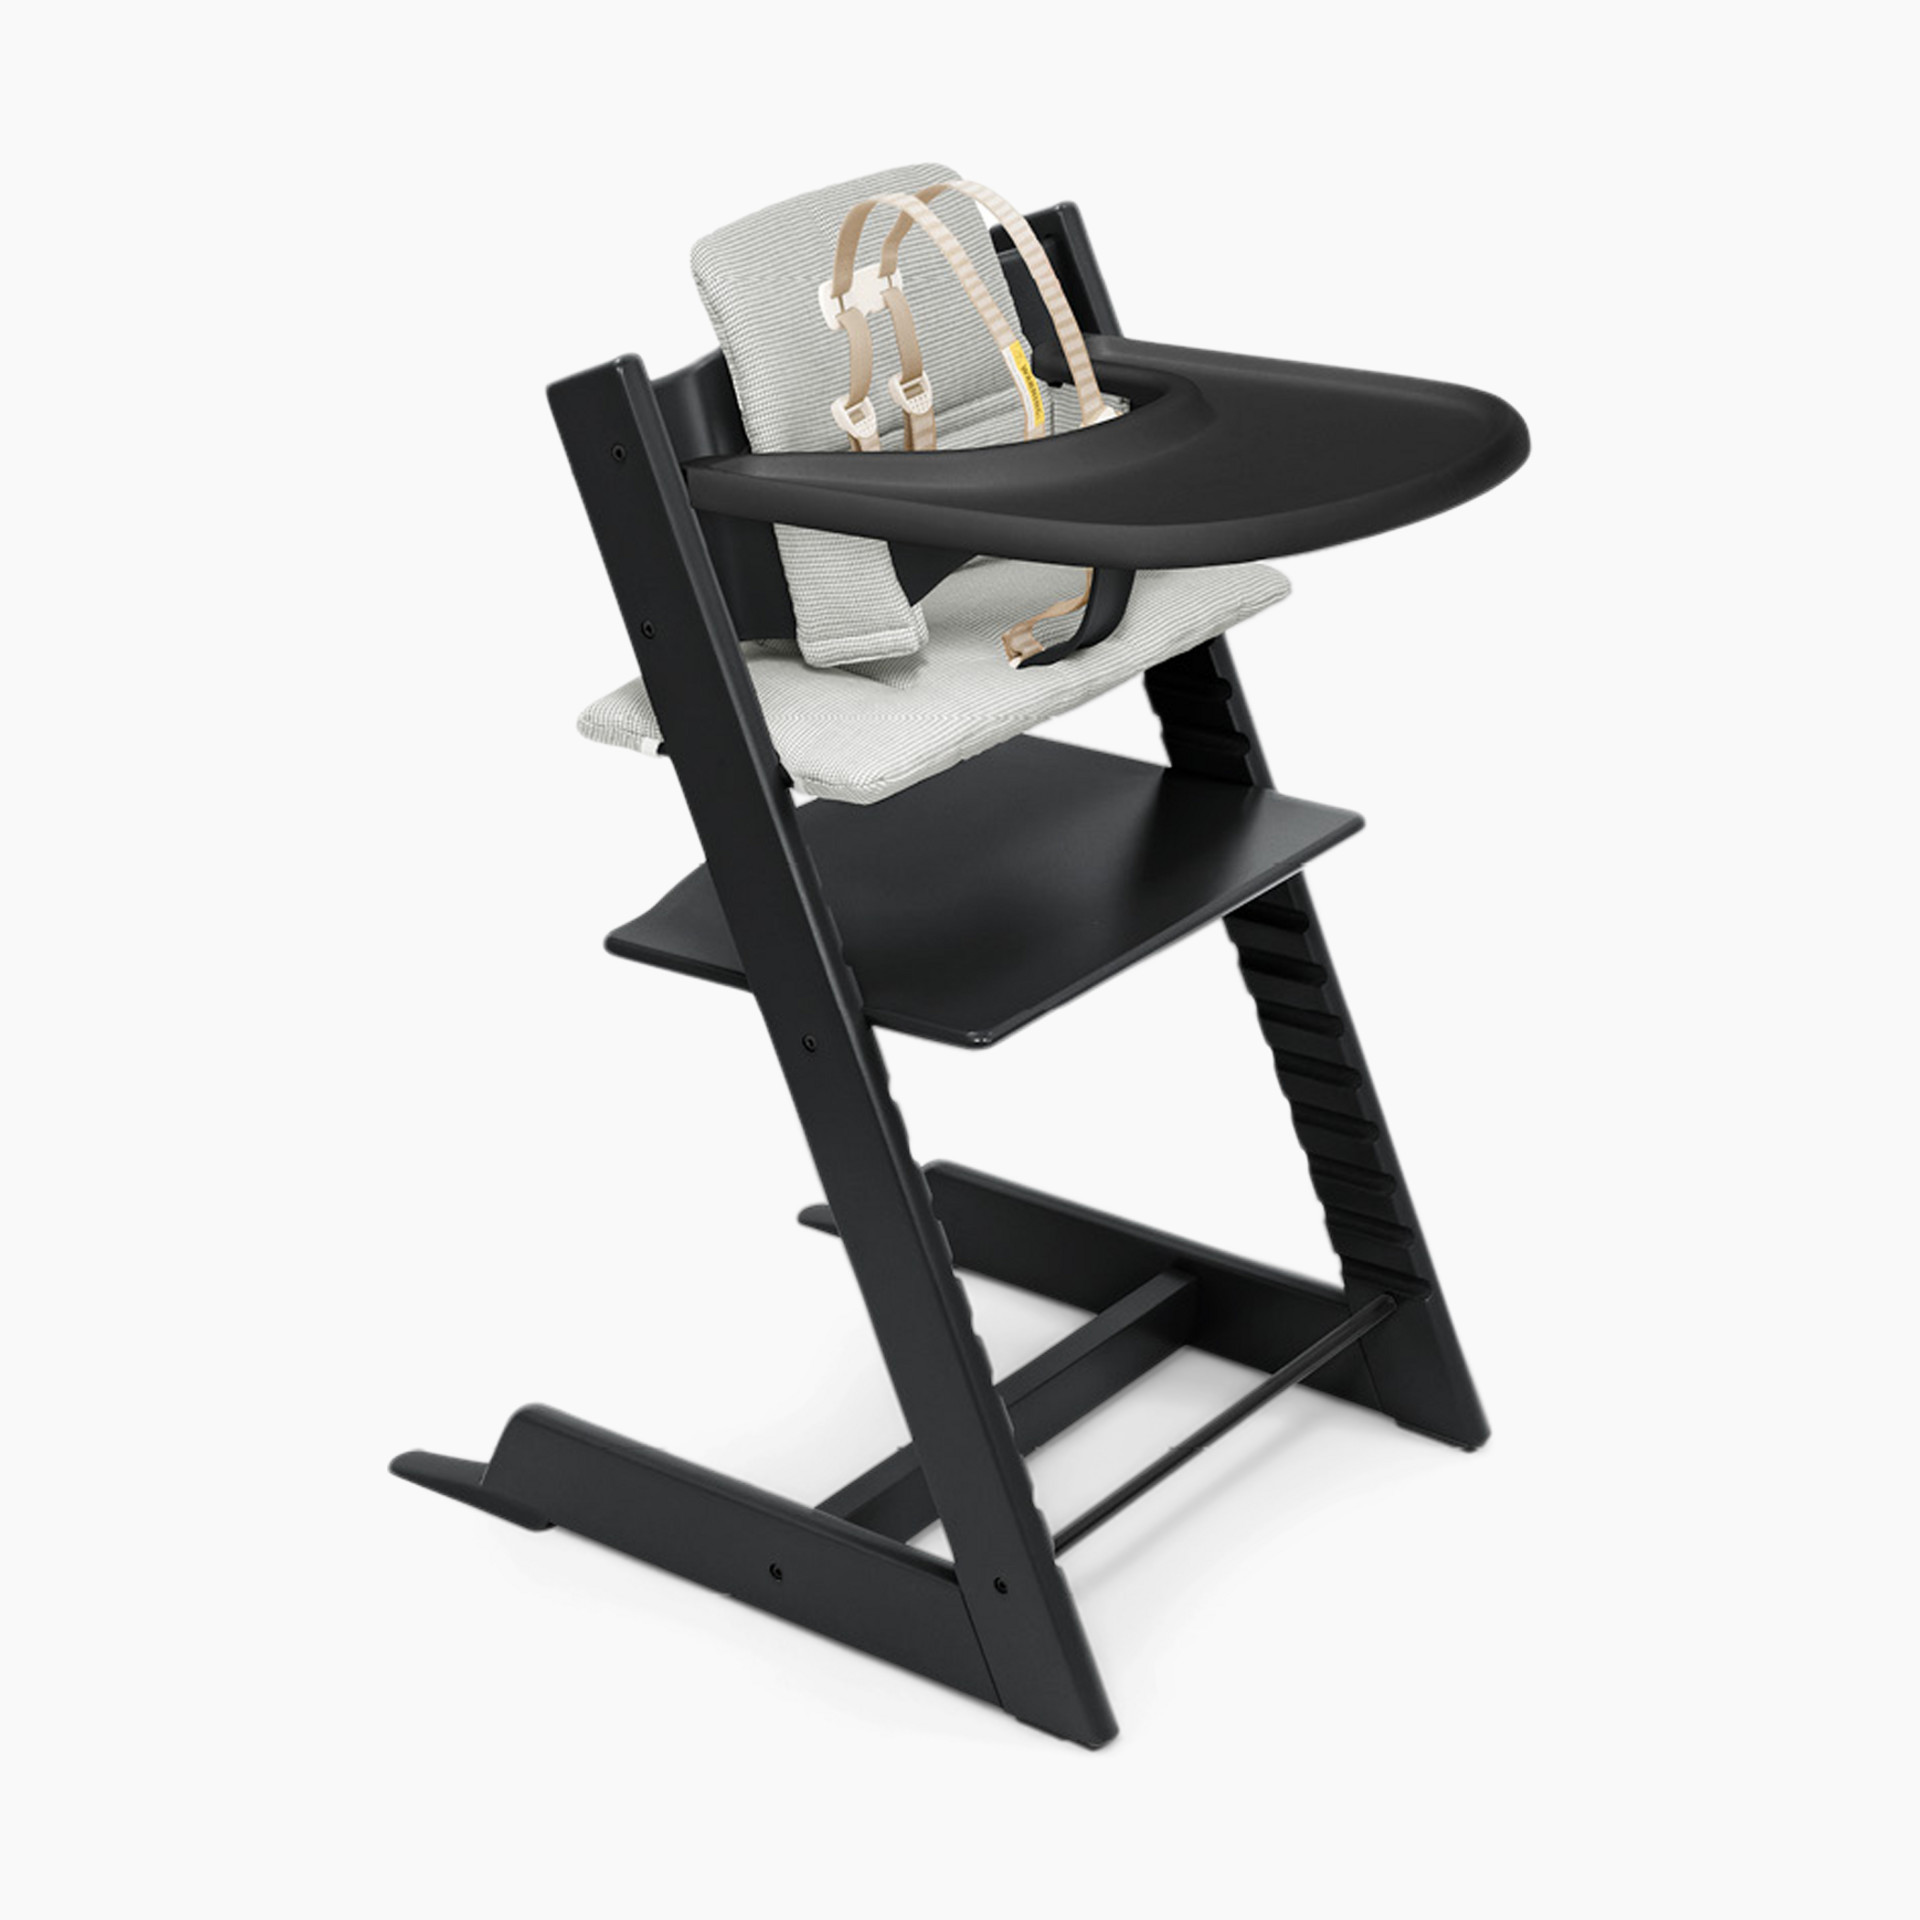 Stokke Tripp Trapp Chair Complete - Black/Nordic Grey/Black Tray | Babylist Shop